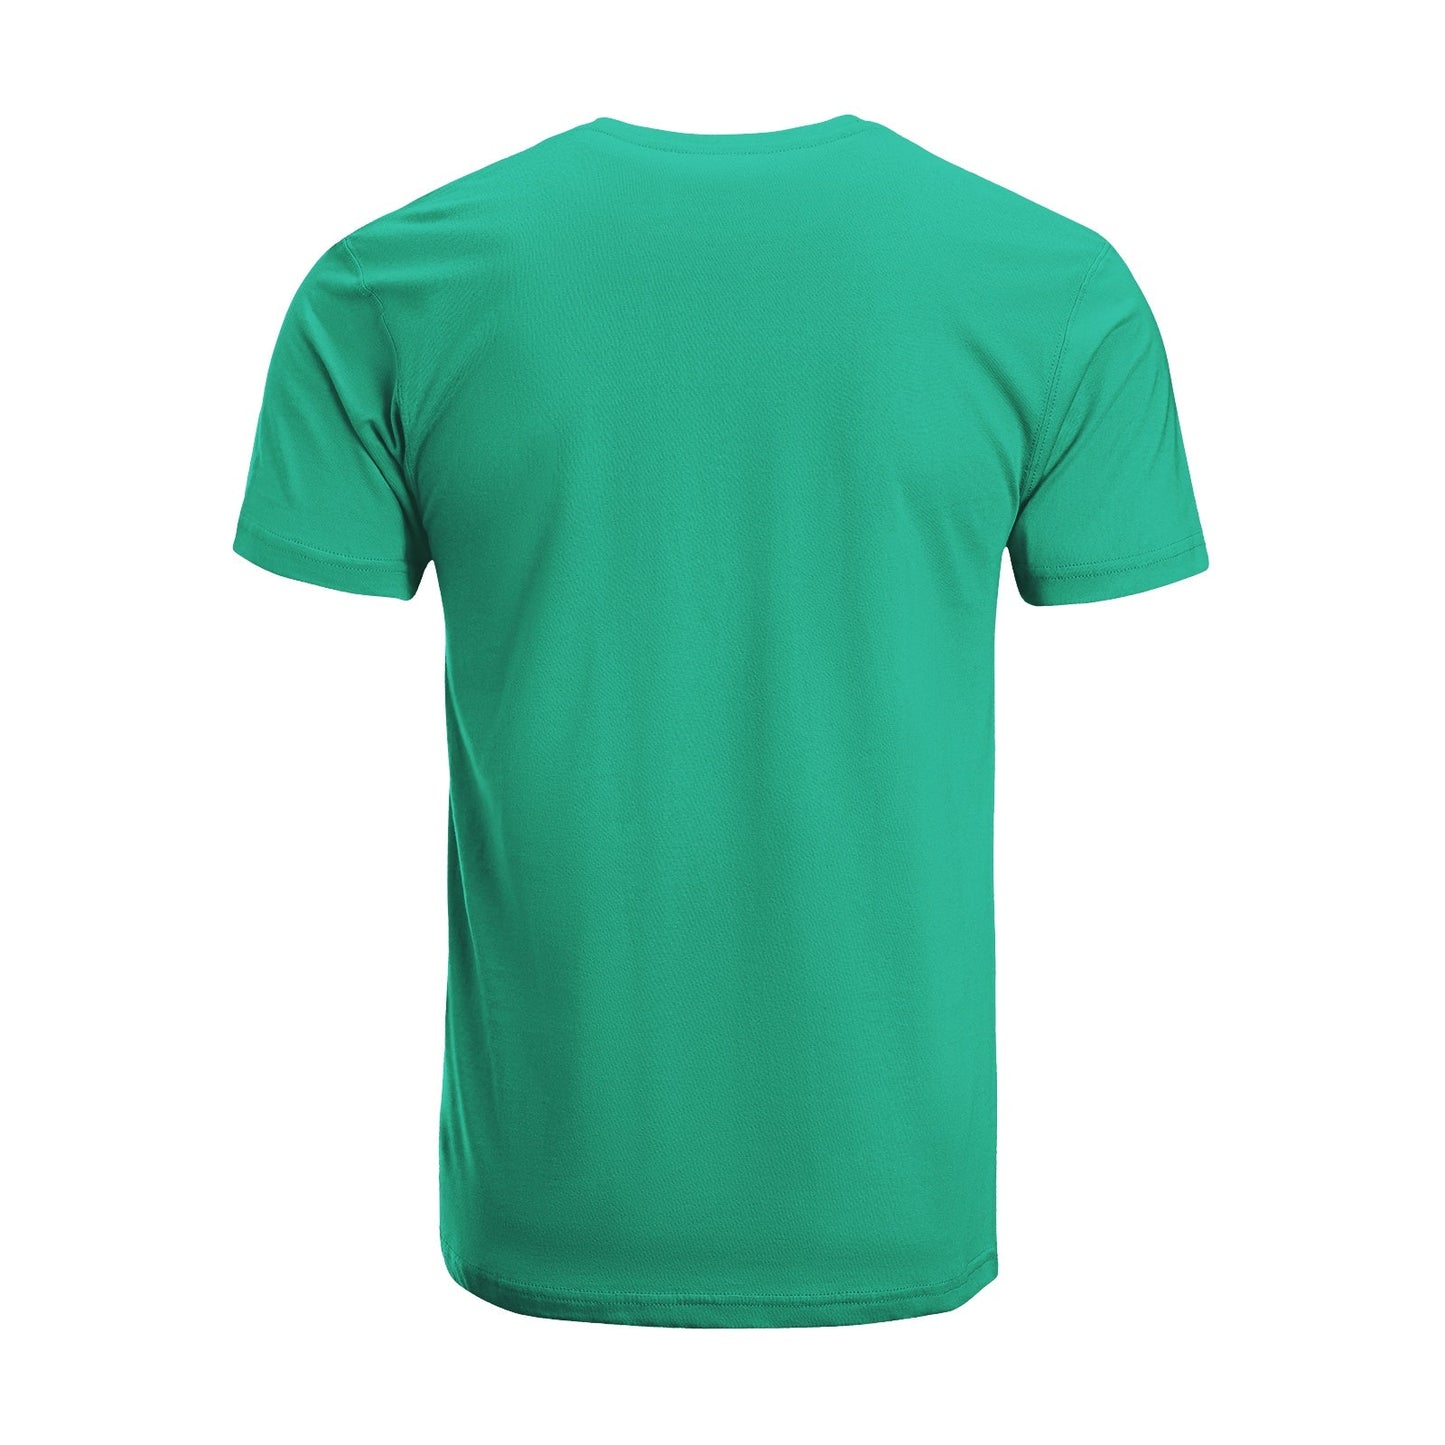 Unisex Short Sleeve Crew Neck Cotton Jersey T-Shirt Gym No. 41 - Tara-Outfits.com